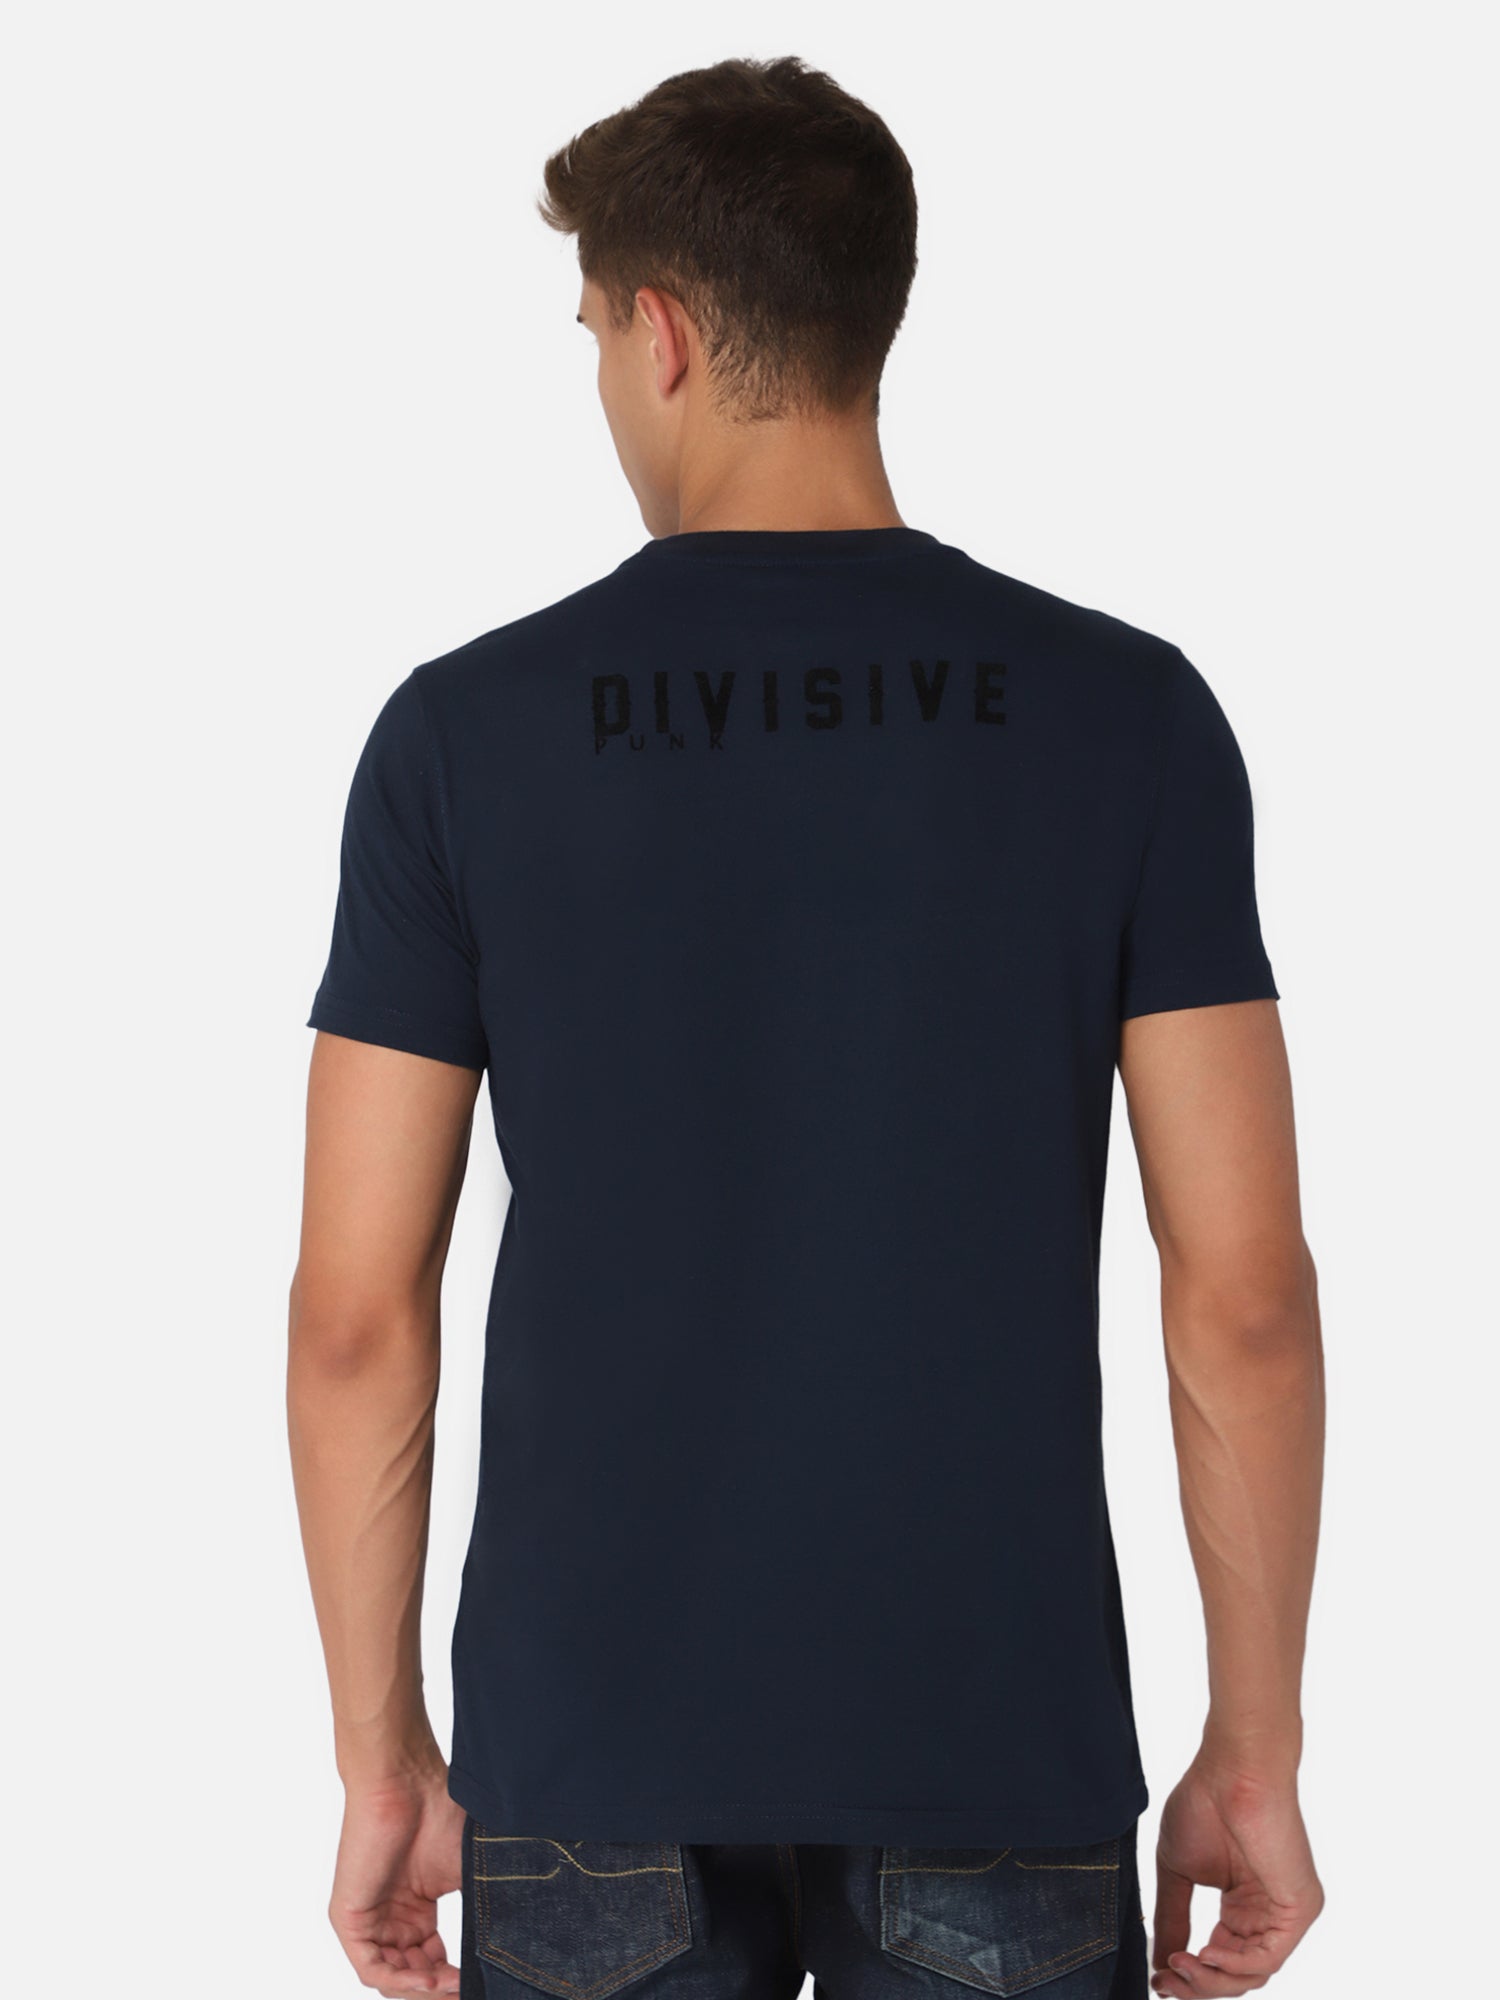 Punk DIVISIVE Navy T-shirt